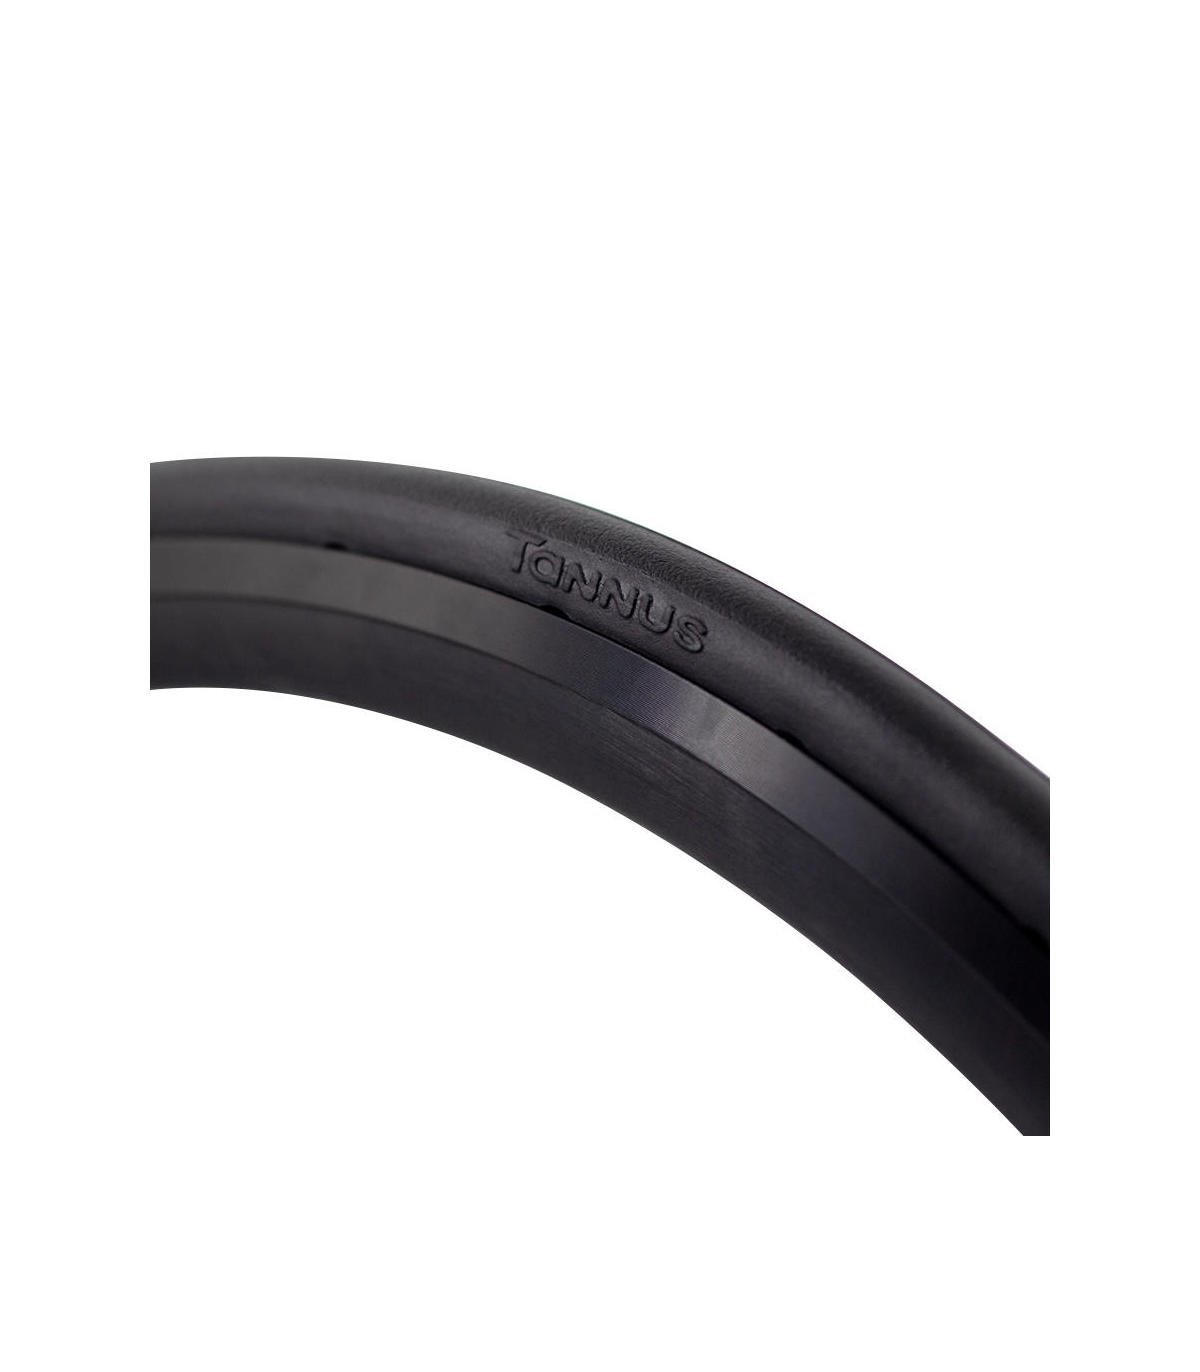 Cubierta Slick 700 * 23c (23-622) Hard Tannus Airless Tire - negro - 